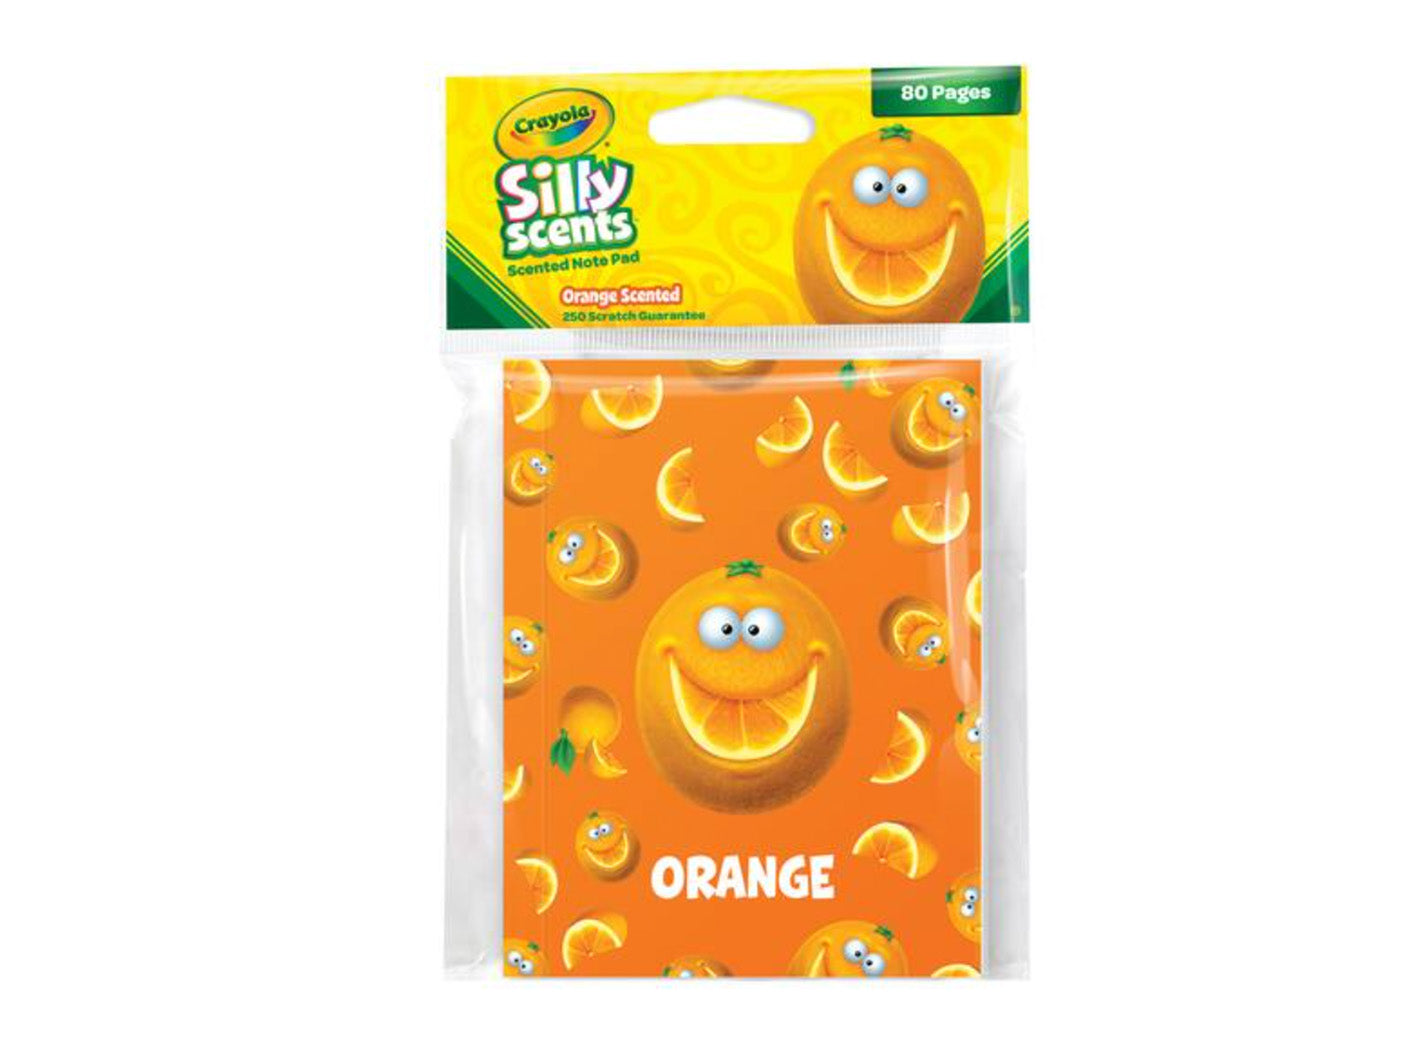 Orange scented notebook for kids